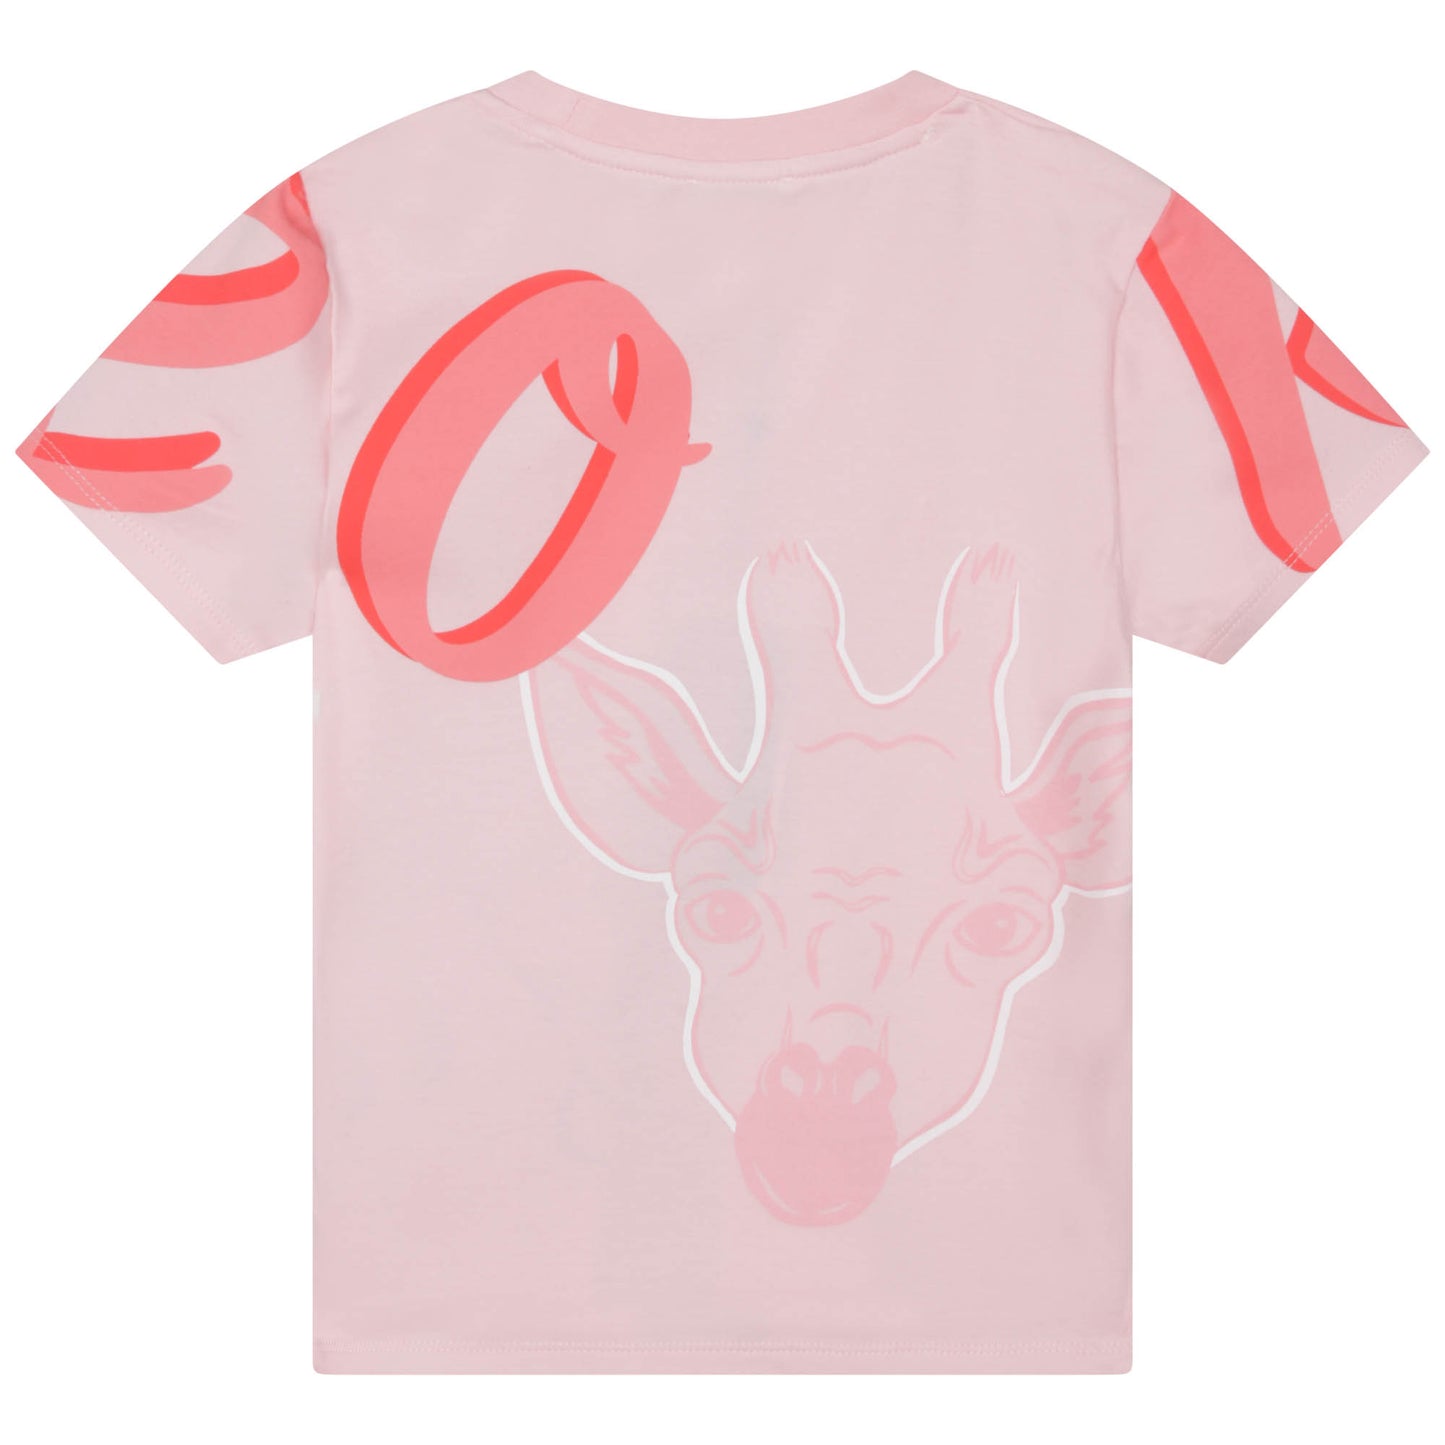 Kenzo Short Sleeved Tee Shirt w/ Giraffe & Tiger Graphic